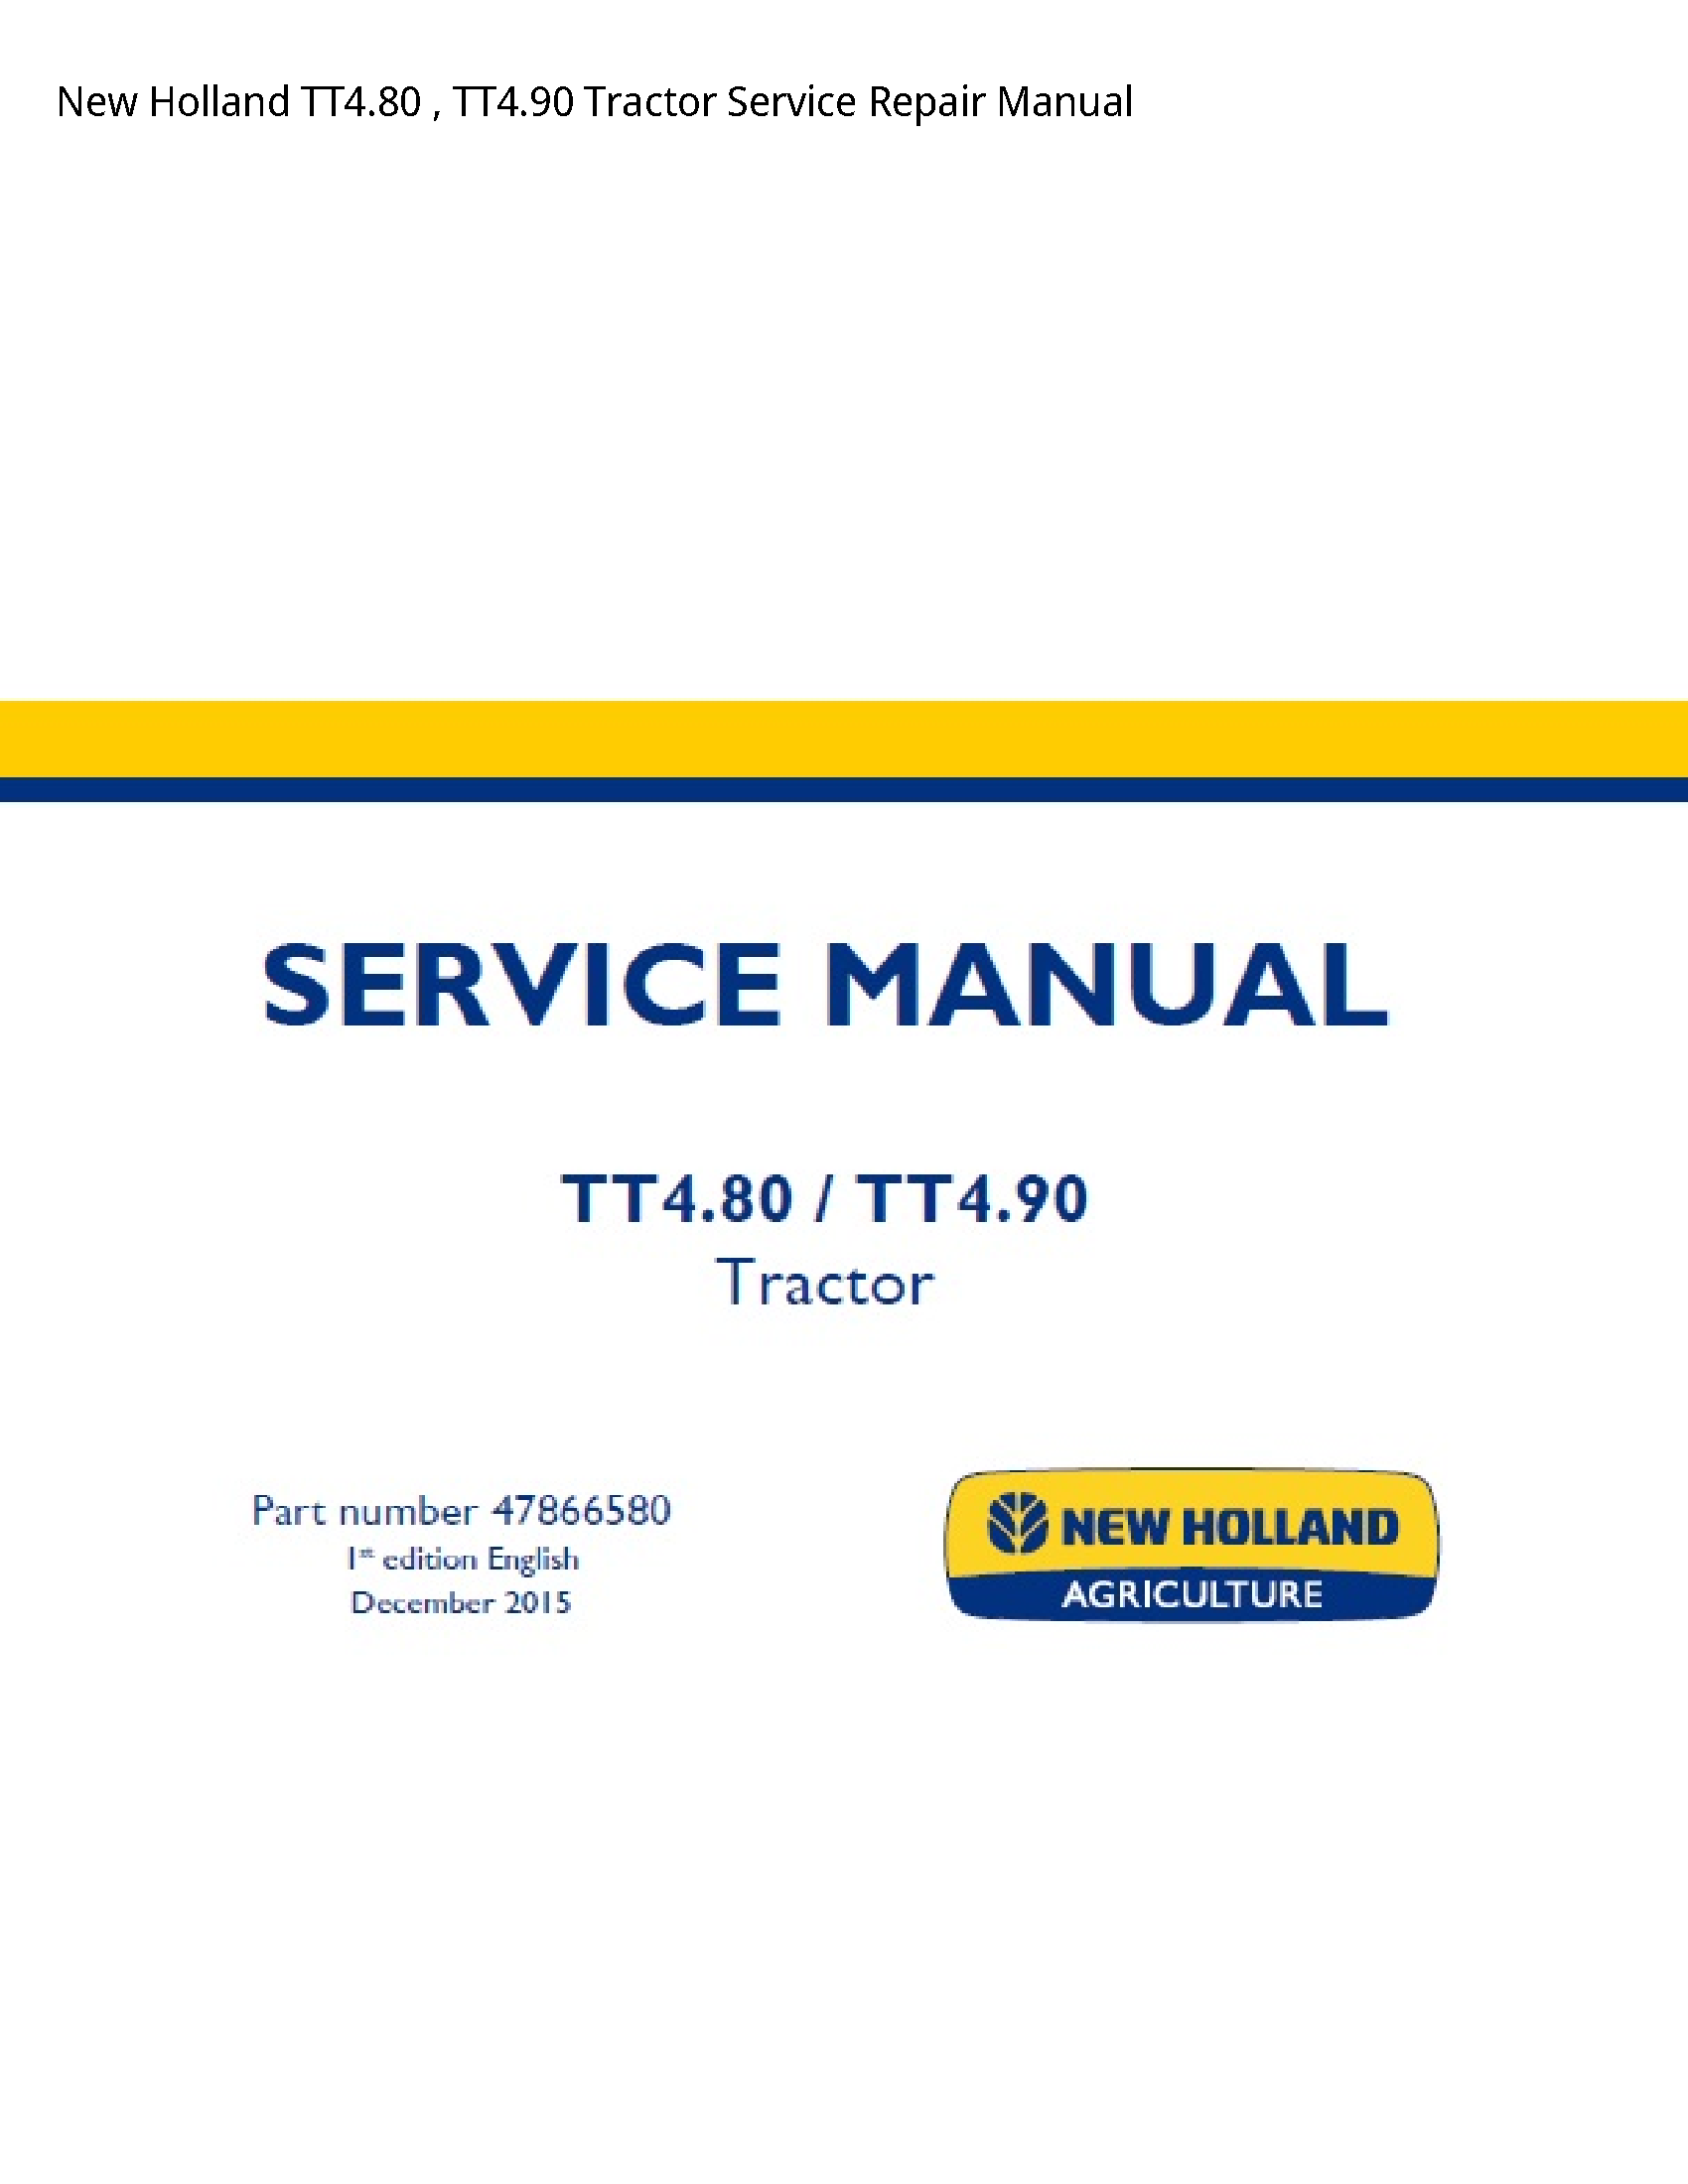 New Holland TT4.80 Tractor manual